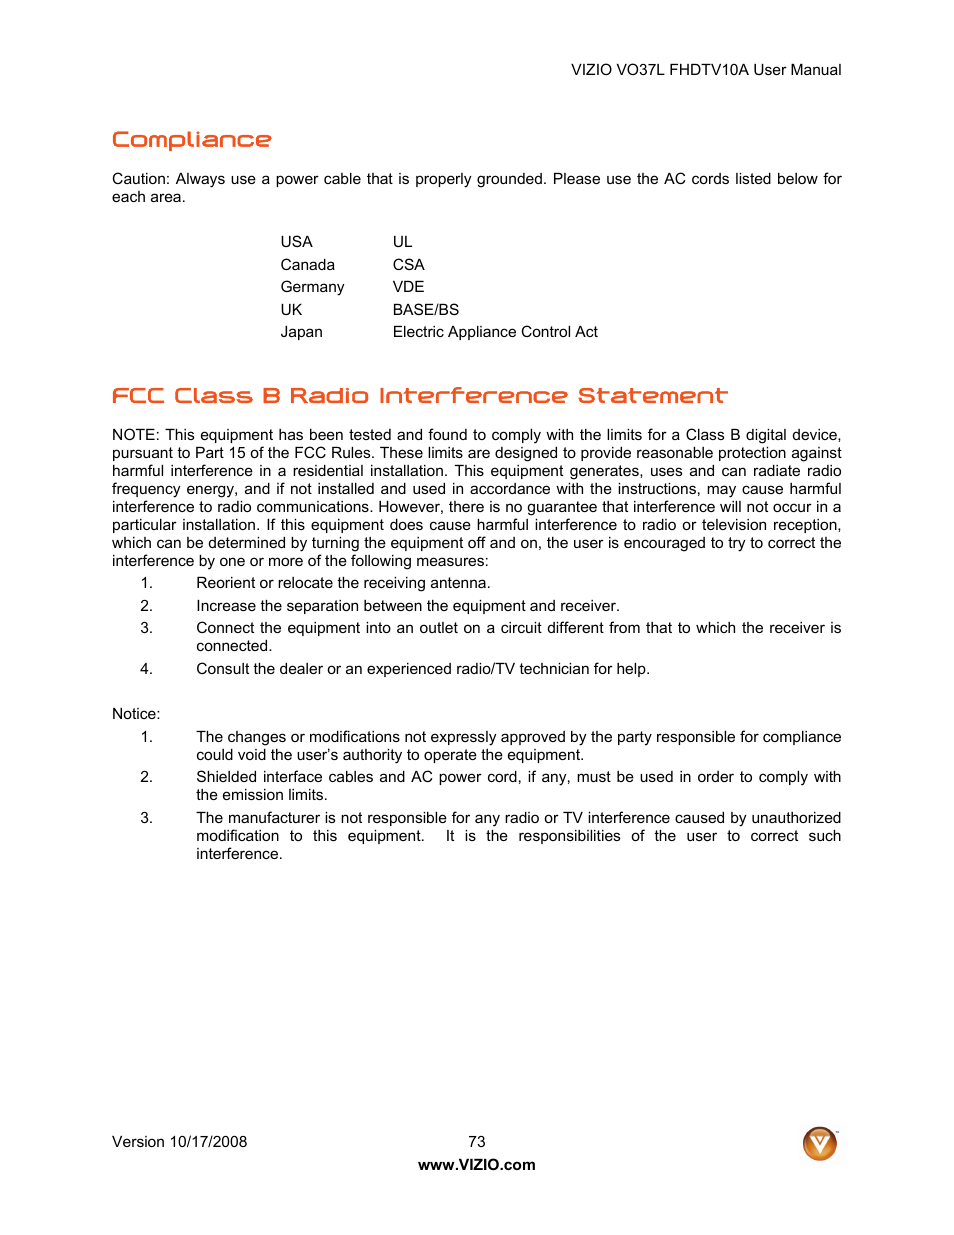 Compliance, Fcc class b radio interference statement | Vizio VO37L FHDTV10A User Manual | Page 73 / 80